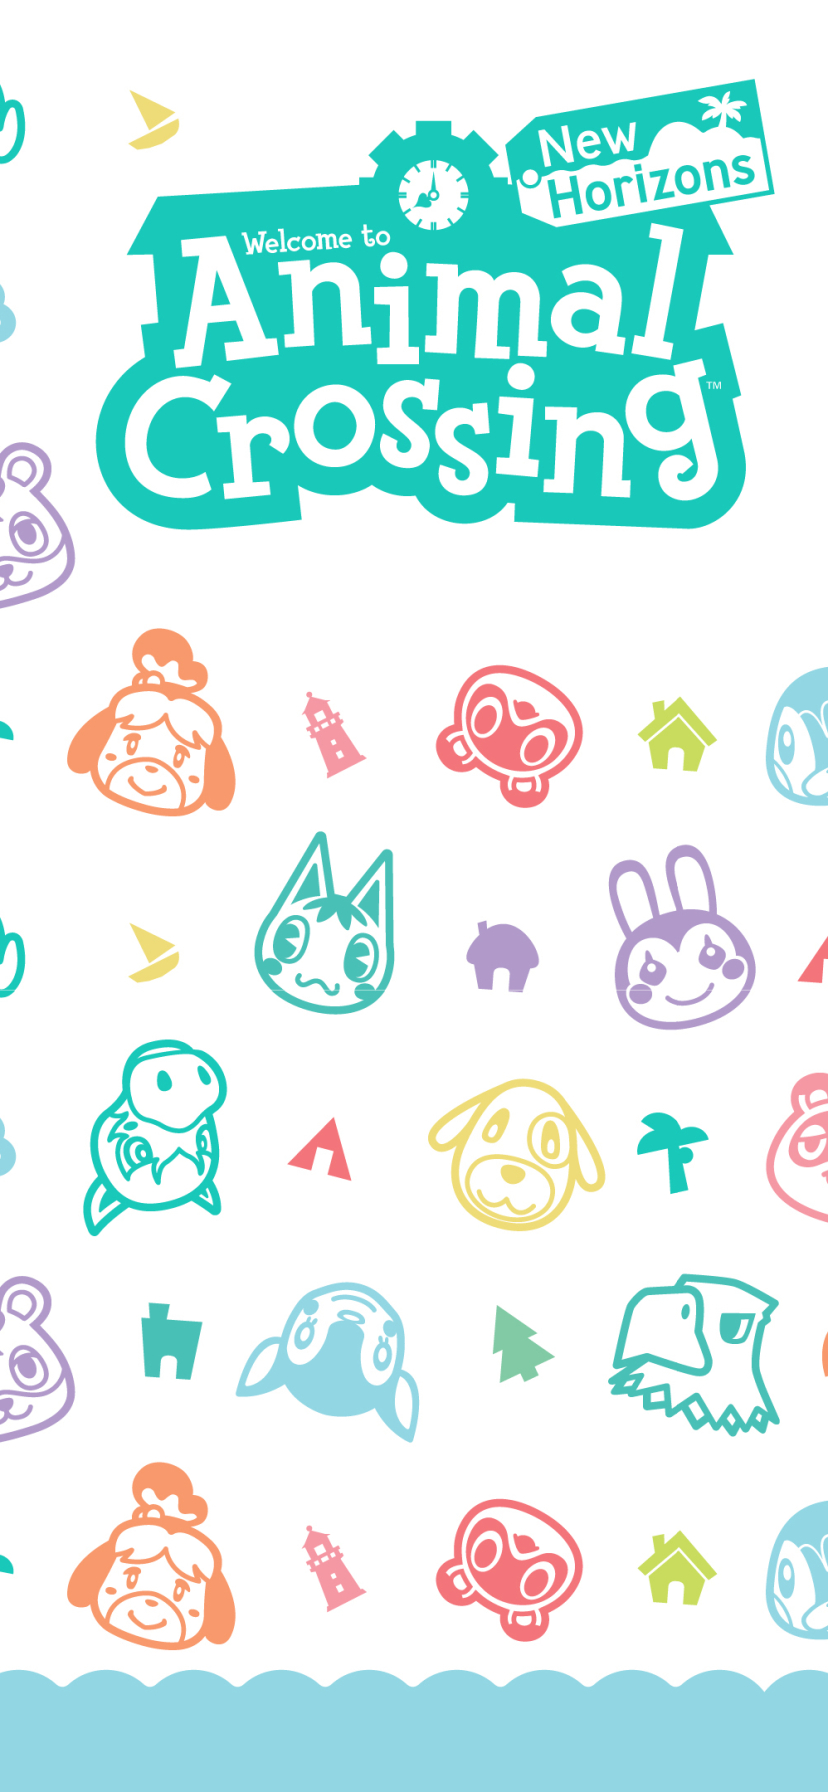 Animal Crossing iPhone Wallpaper Dark Mode  iphone wallpaper post  Imgur